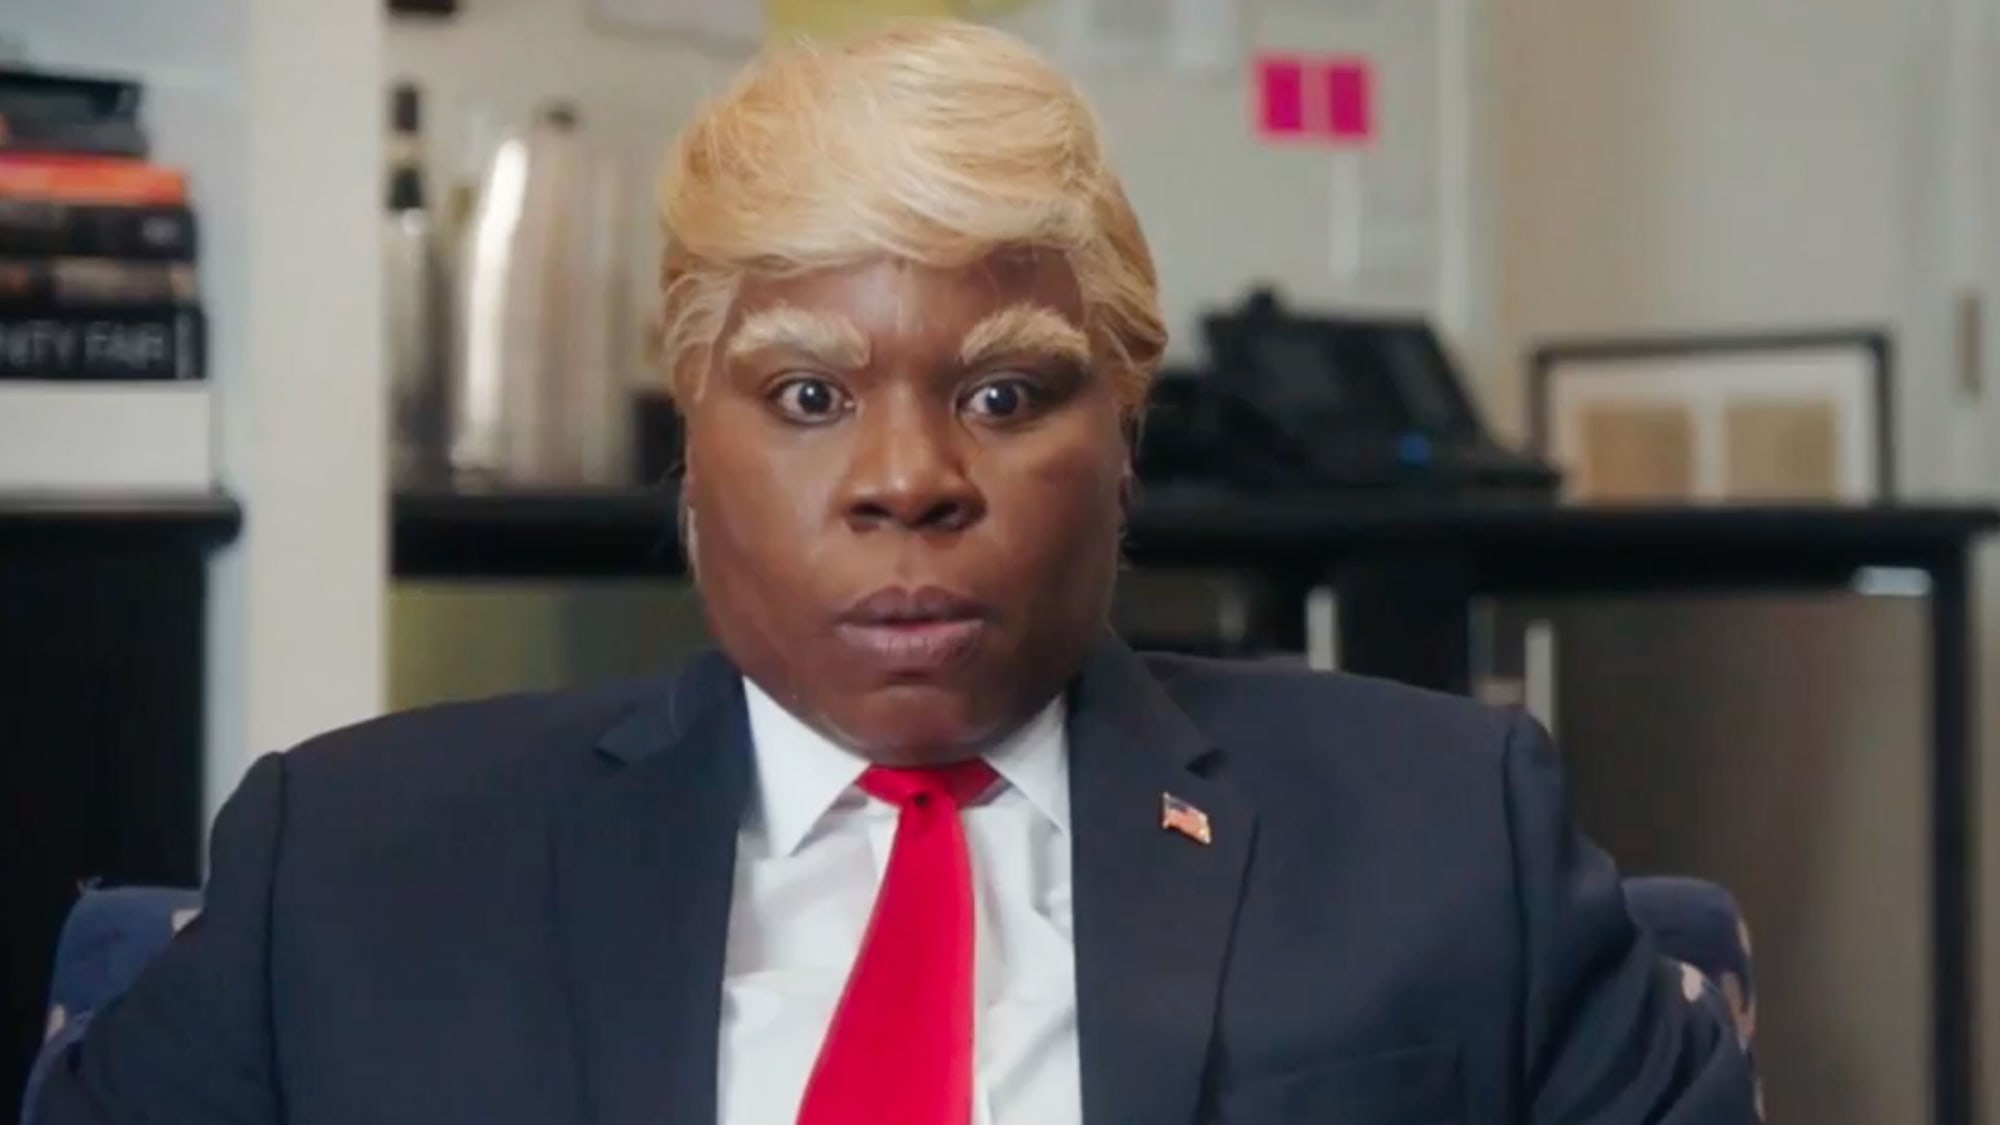 Leslie Jones reveals SNL cast 'loves' making Donald Trump mad